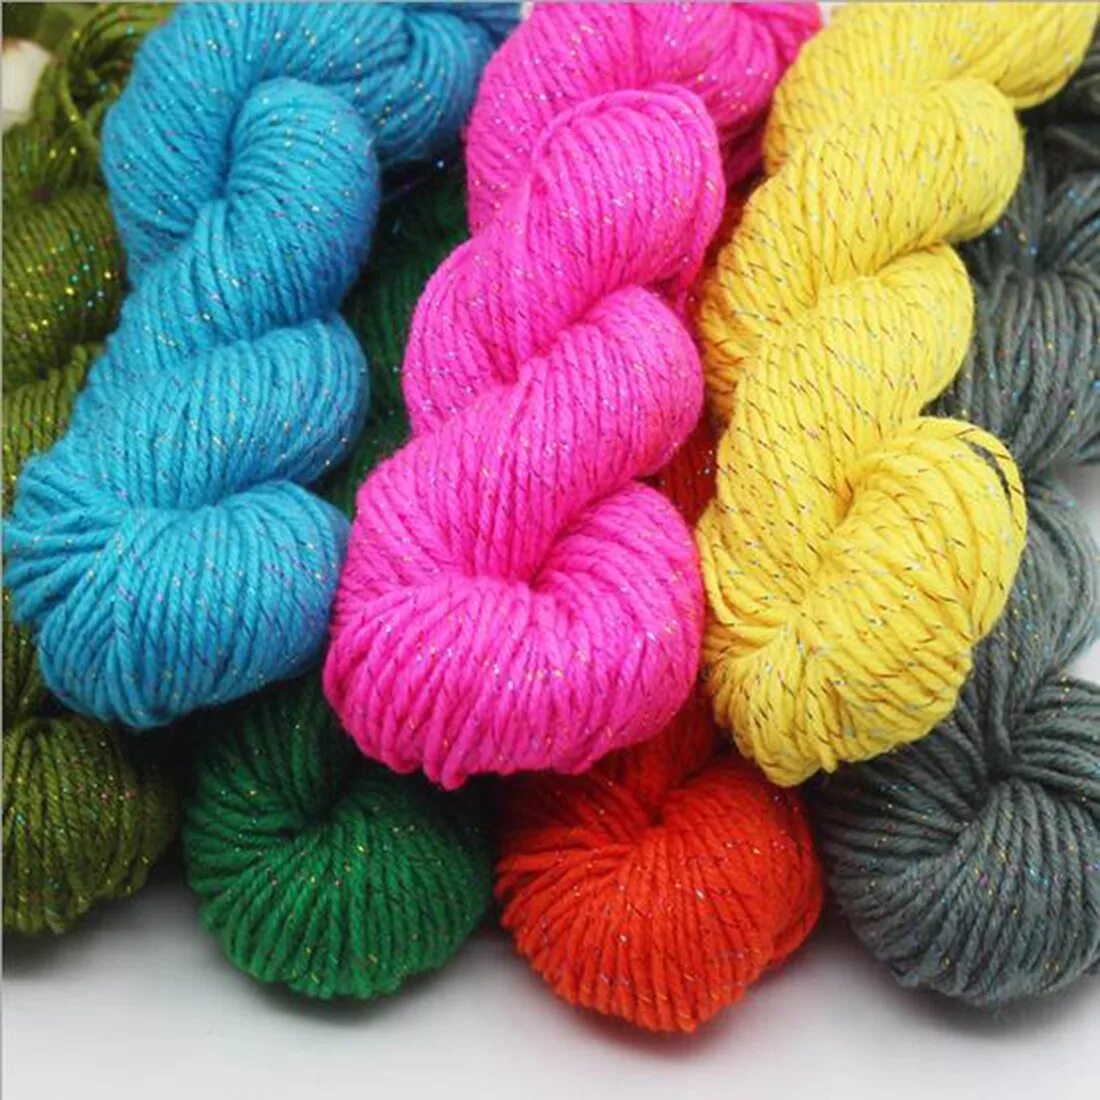 Пряжа косичка. Нитки для вязания. Разноцветная пряжа. Цветные нитки для вязания. Синтетическая пряжа.